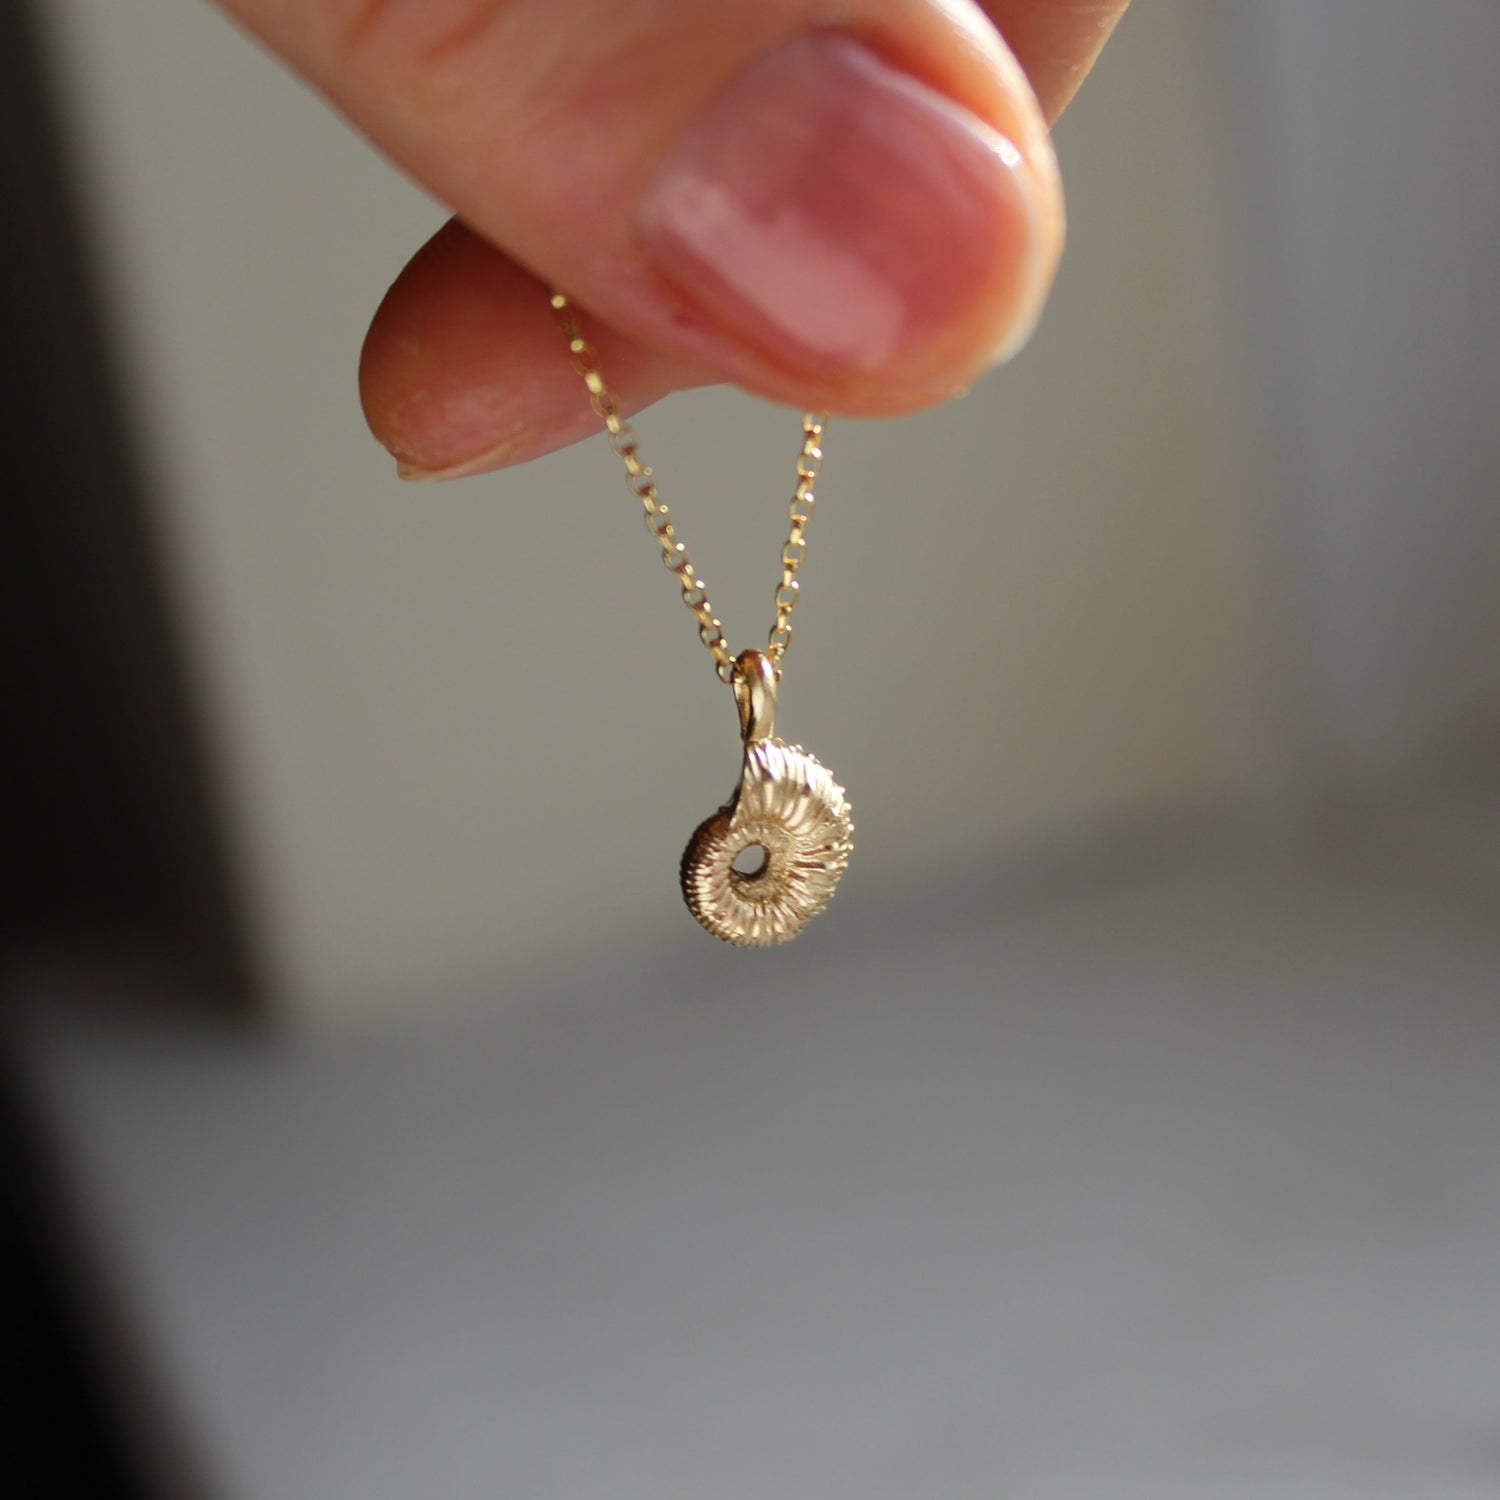 Ammonite necklace 9ct gold - Brotheridge